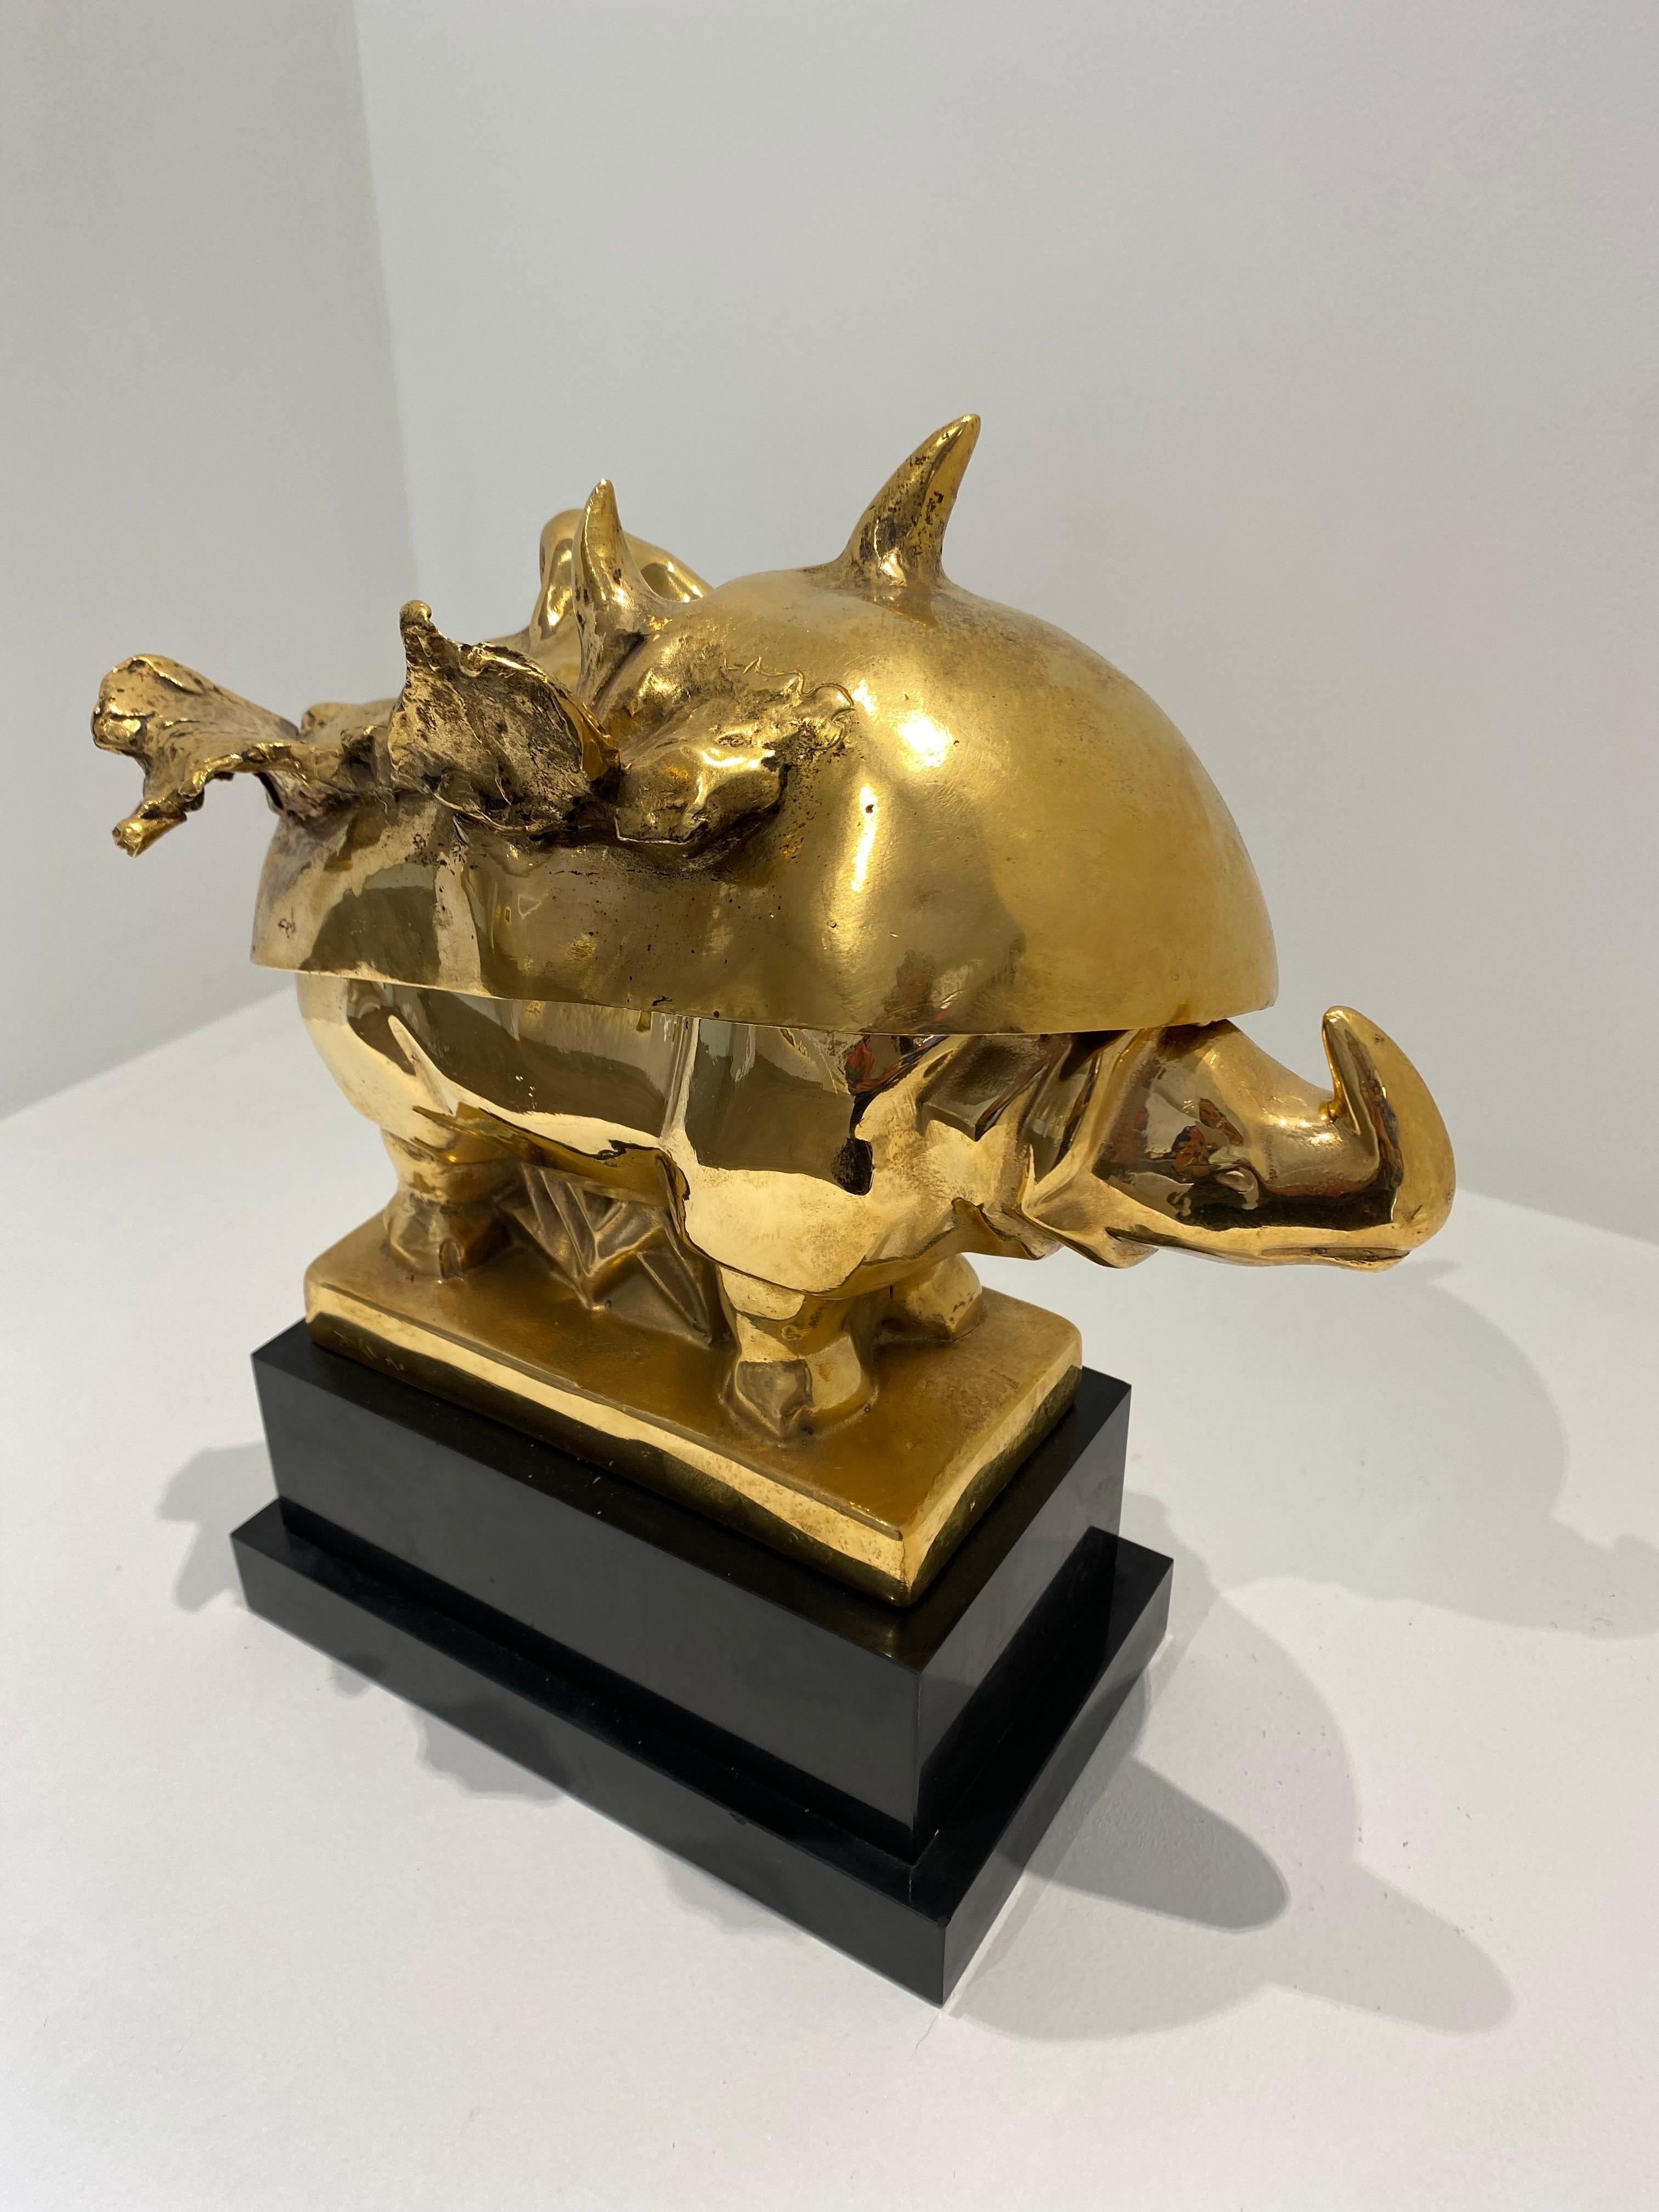 Masque de Napoléon sur un Rhinocéros, Sculpture, Dali, Gold, Animals, Bronze For Sale 1